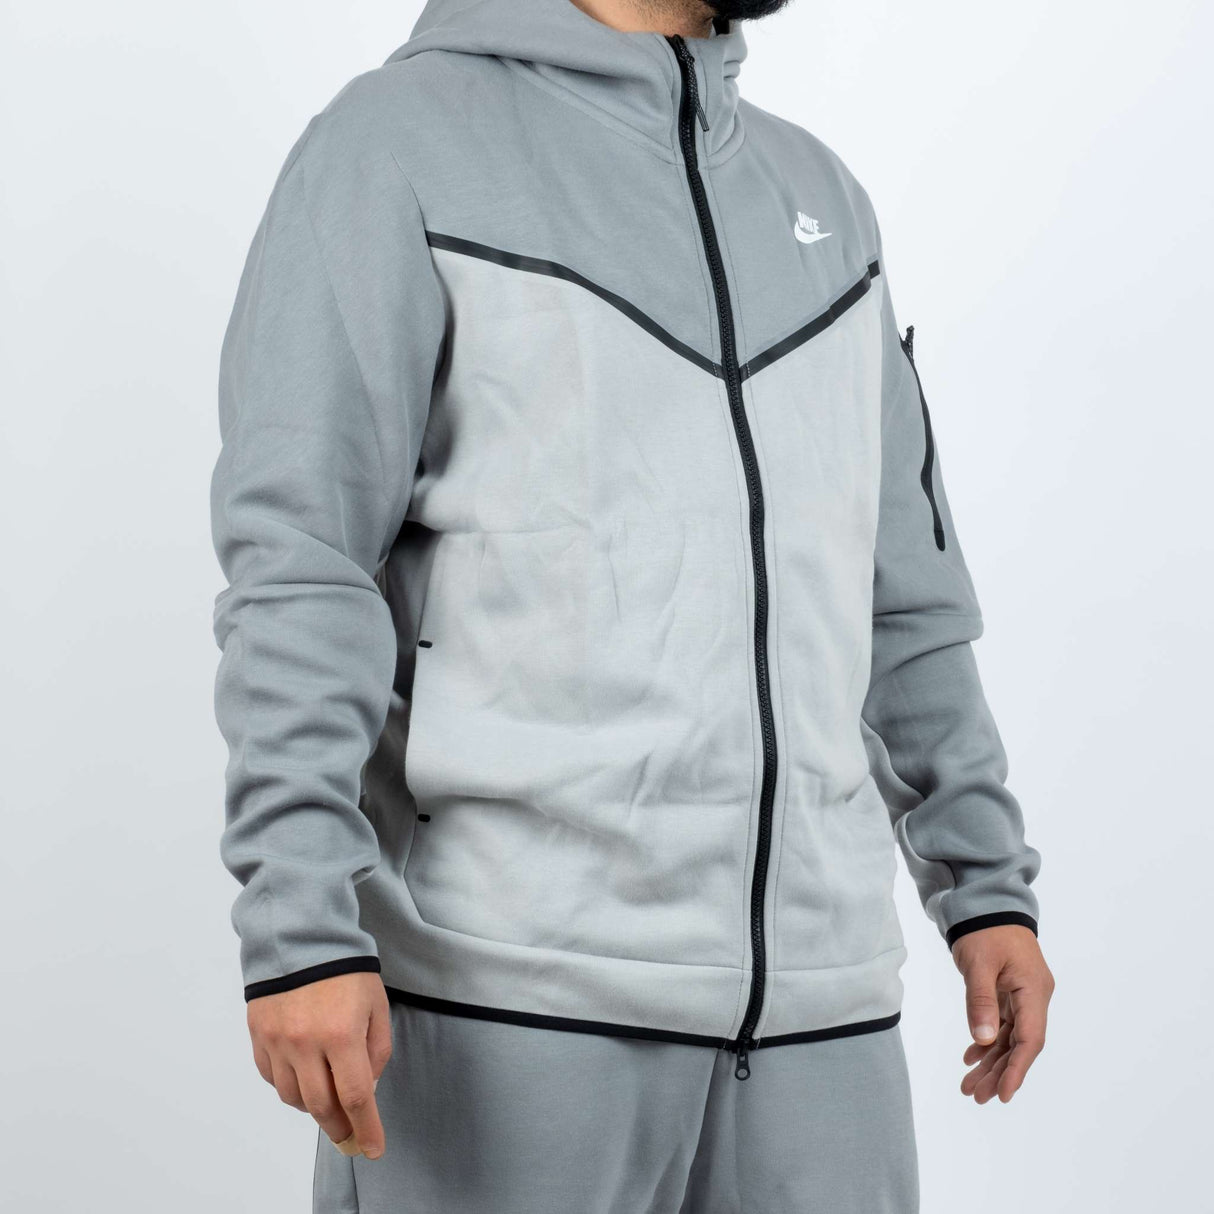 Nike Felpa Sportswear Tech Grigio